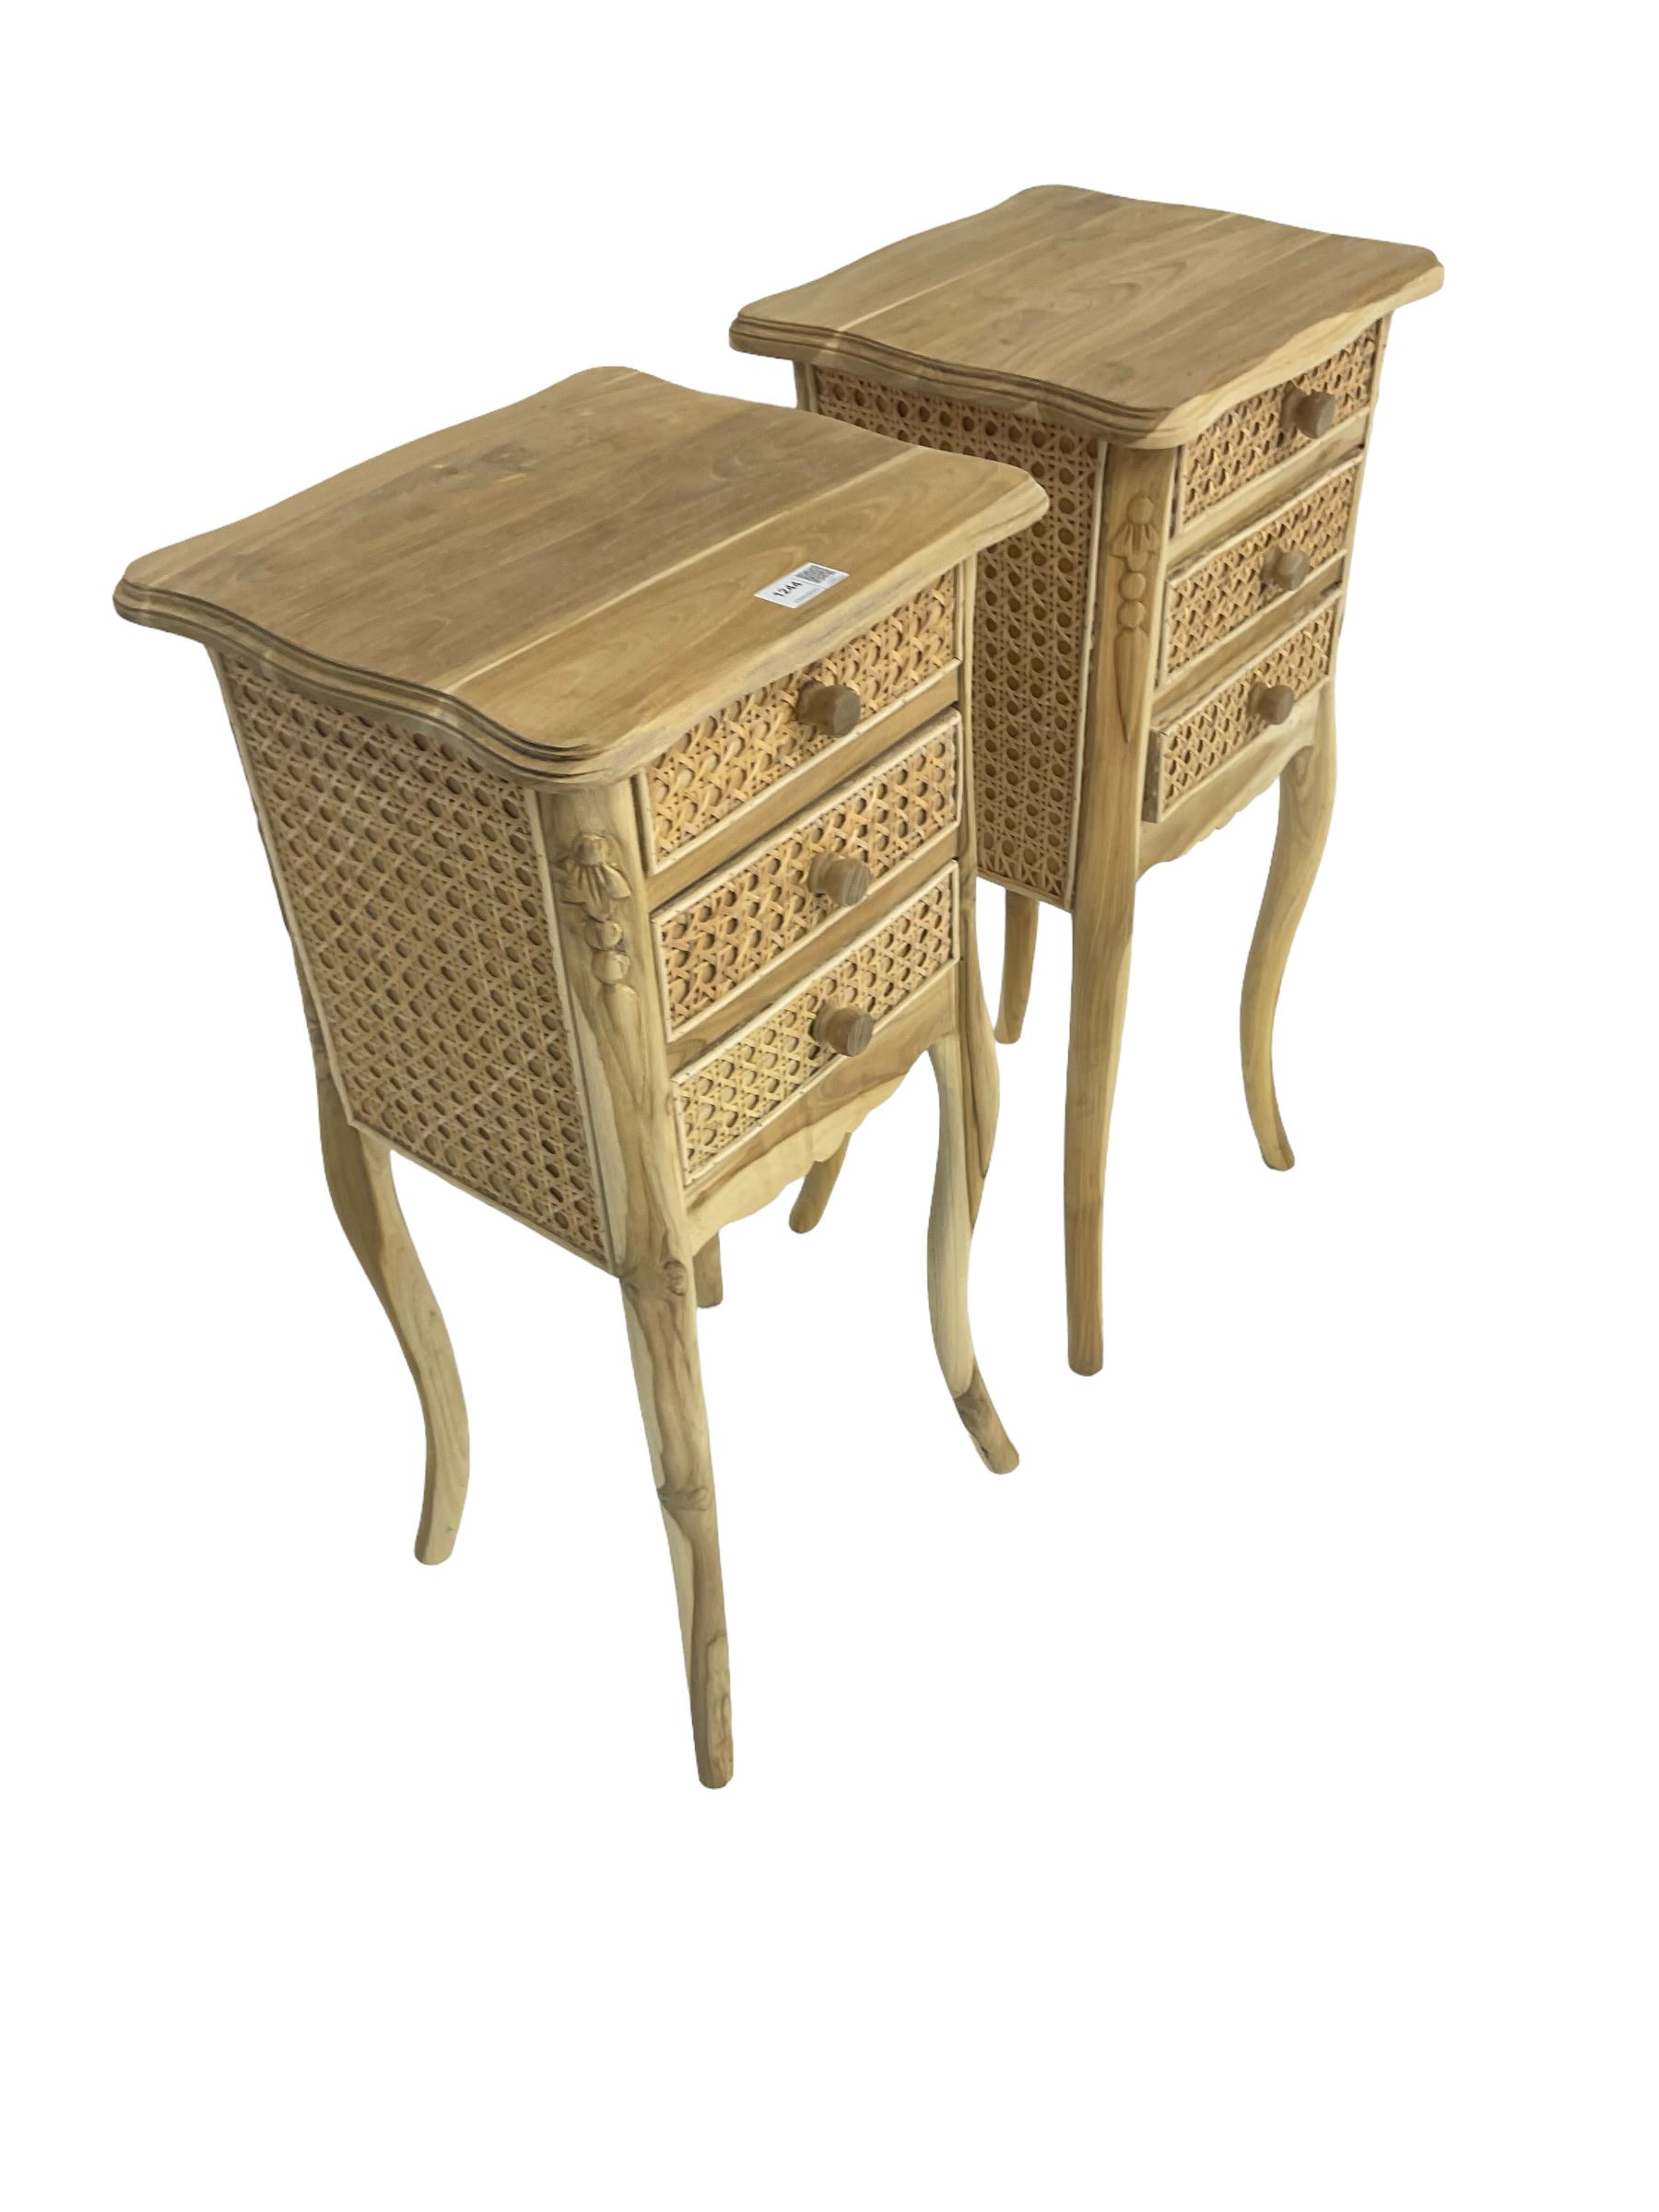 Pair hardwood bedside tables - Image 2 of 7